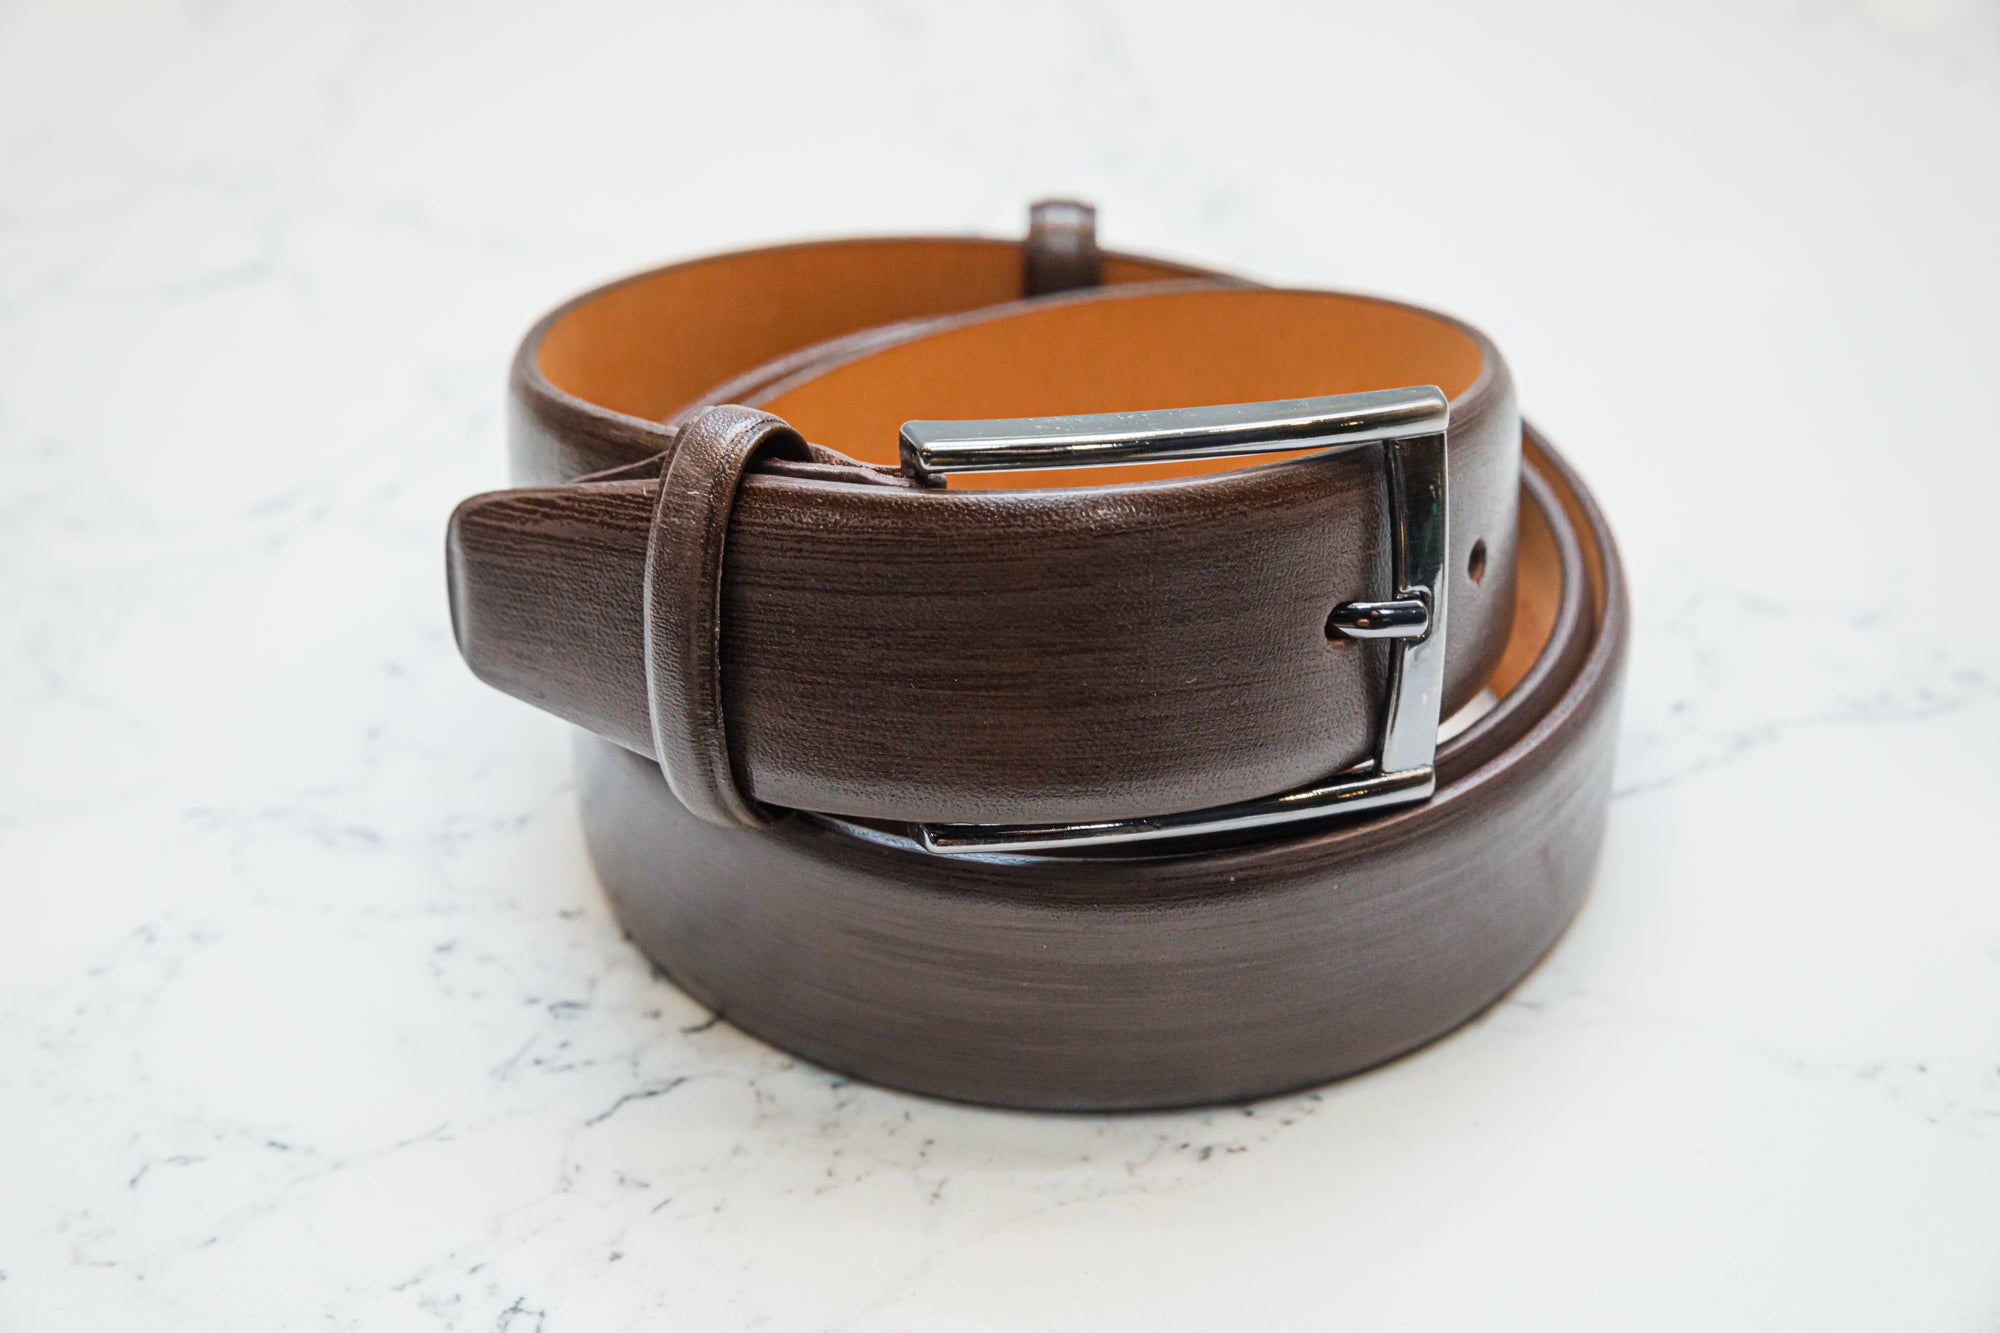 The Patina Belt - Chocolate Brown - Belt by Urbbana